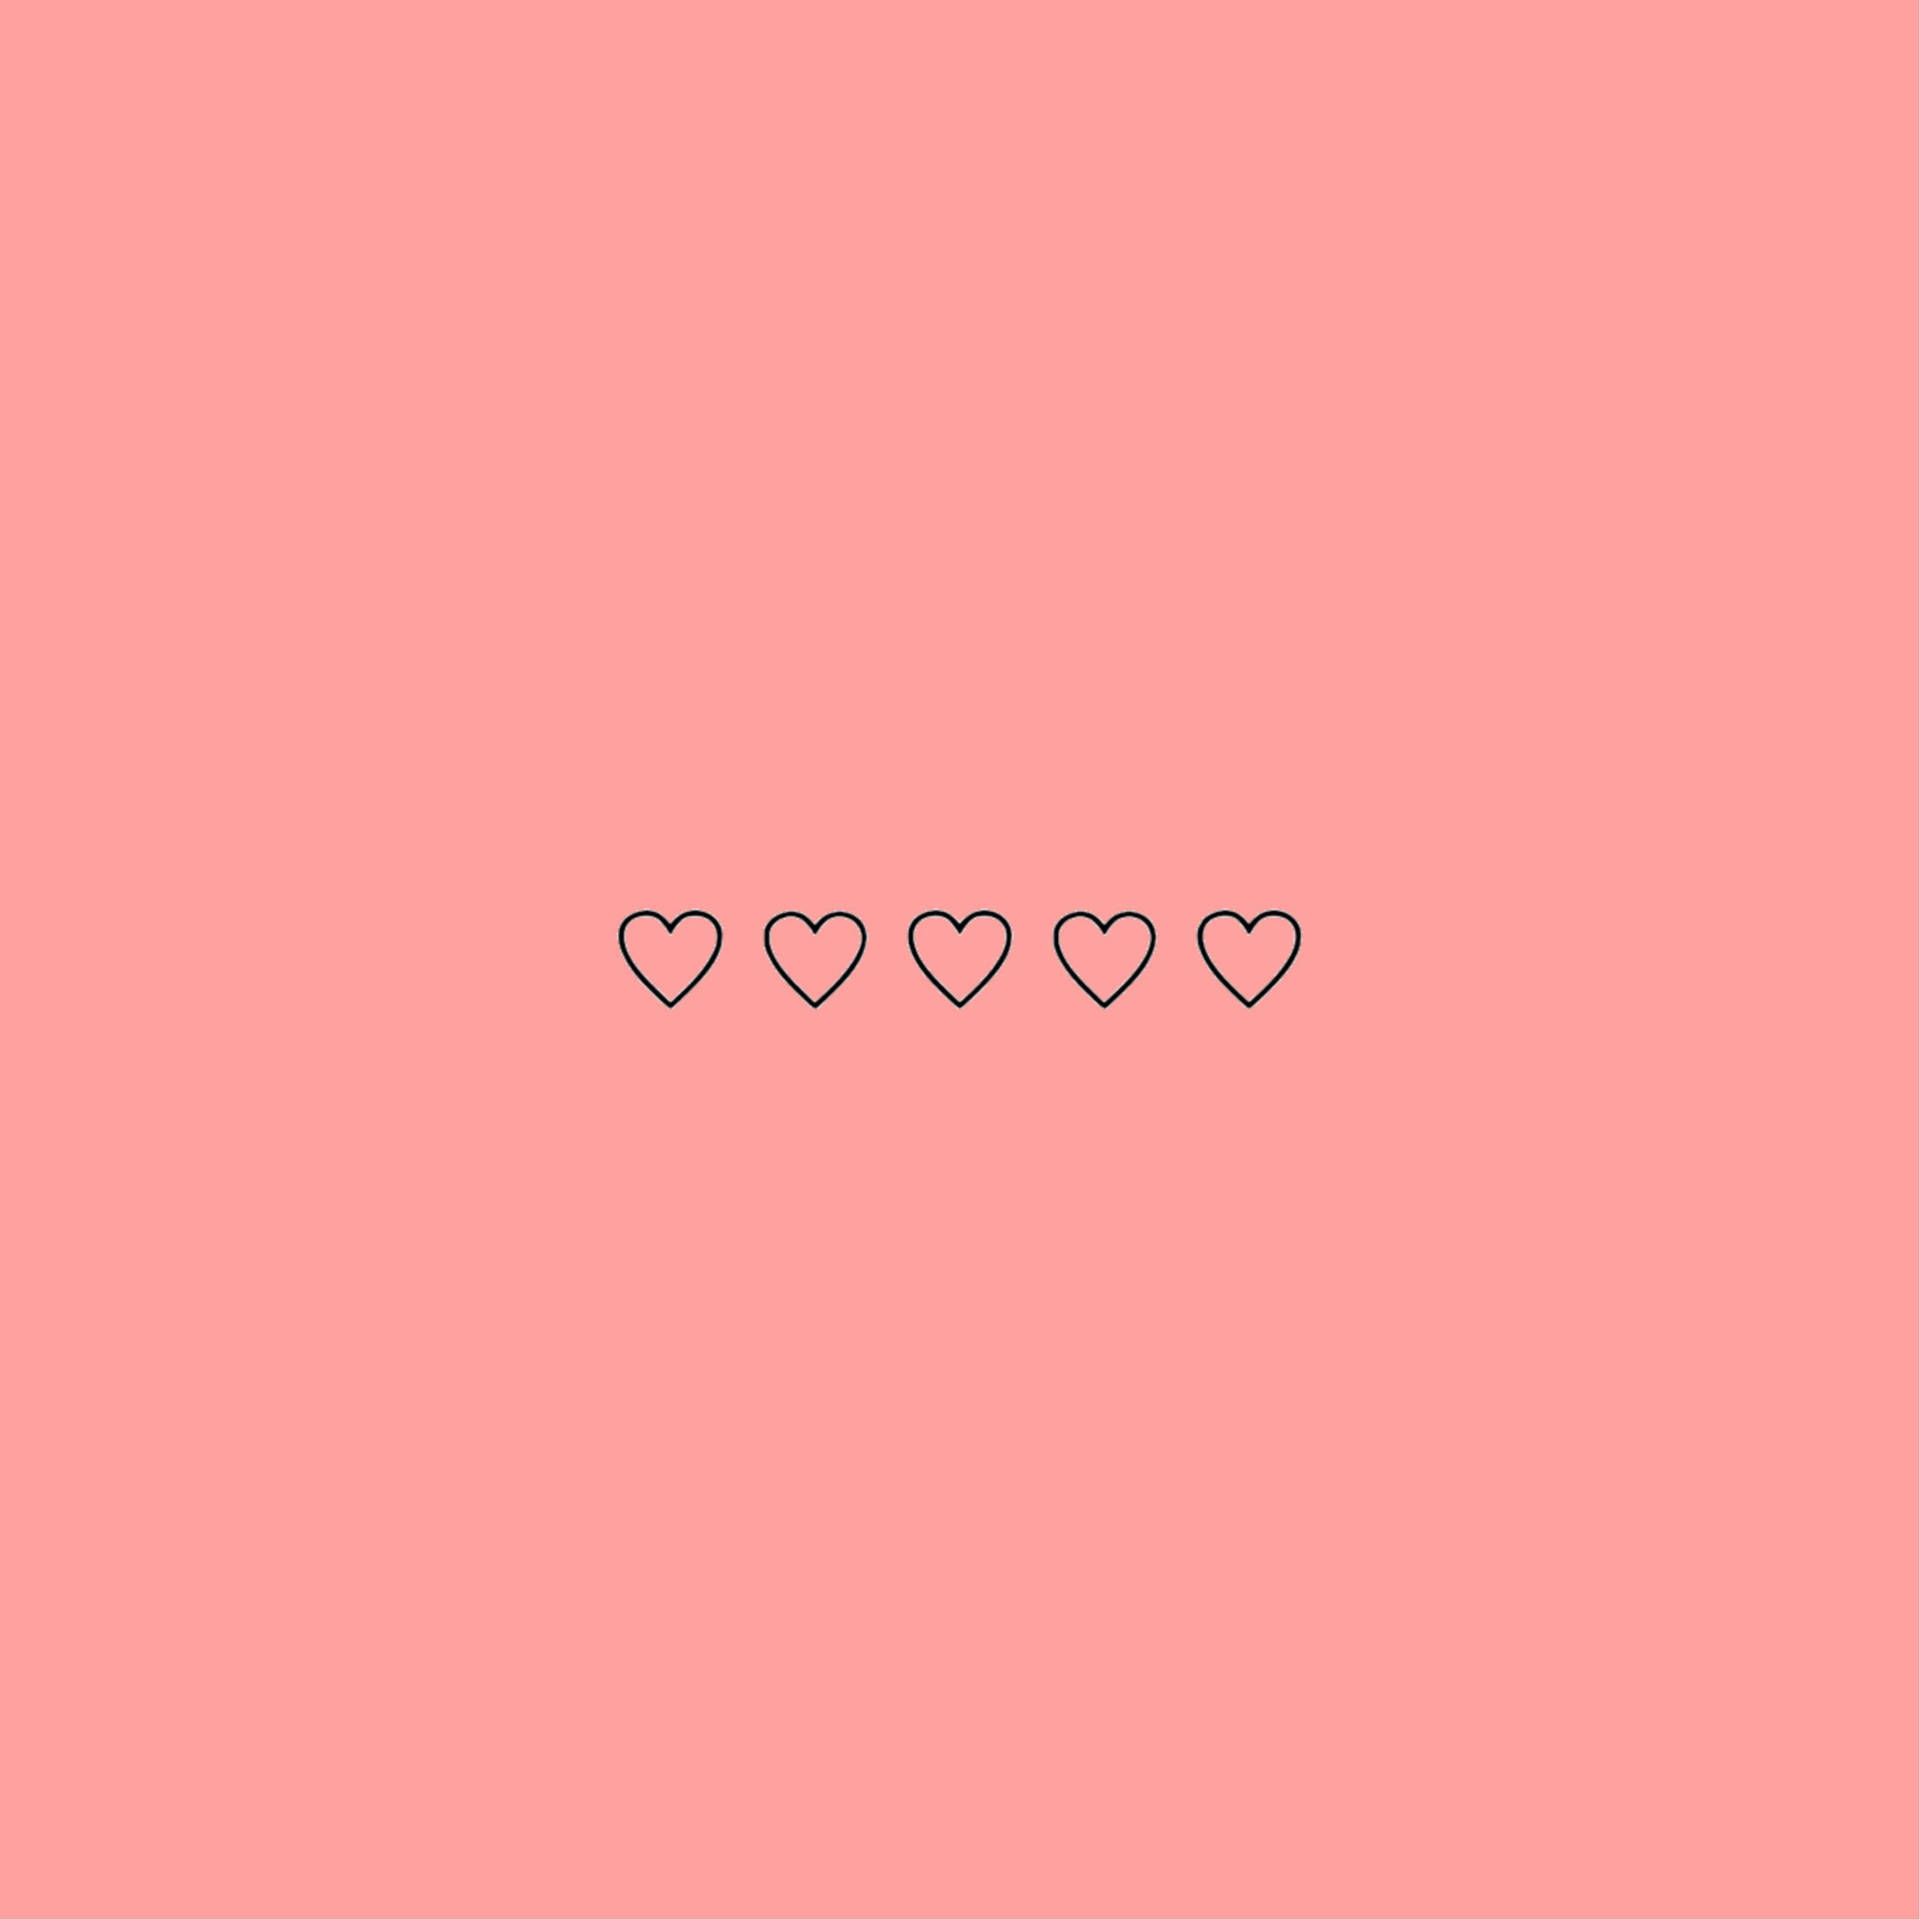 Minimalist Pastel Pink Heart Aesthetic Background